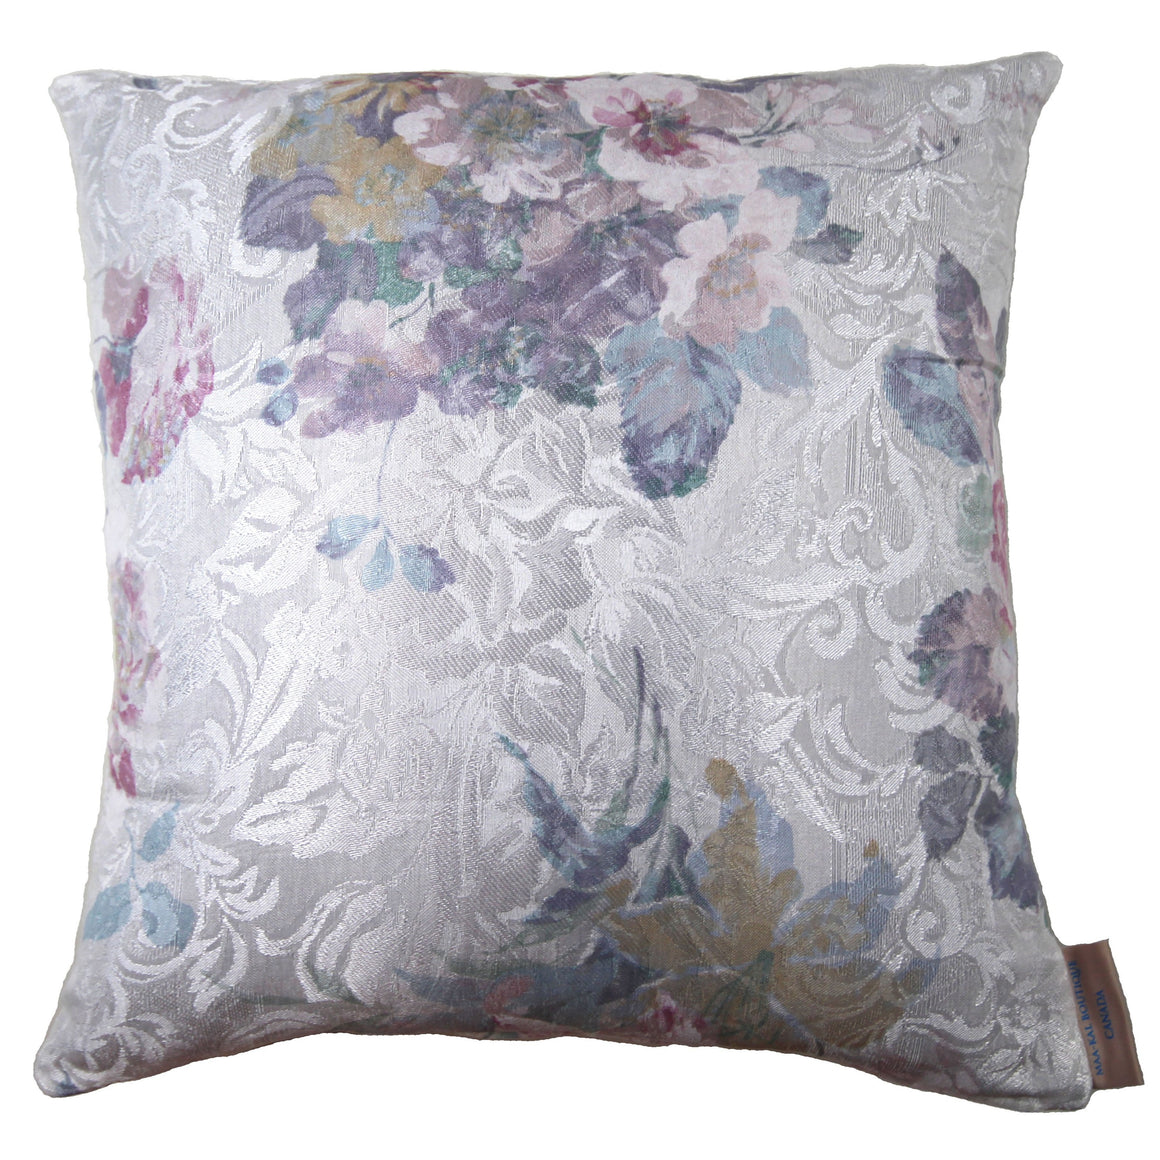 Margaret - White Floral Decorative Pillow Cover - 18x18